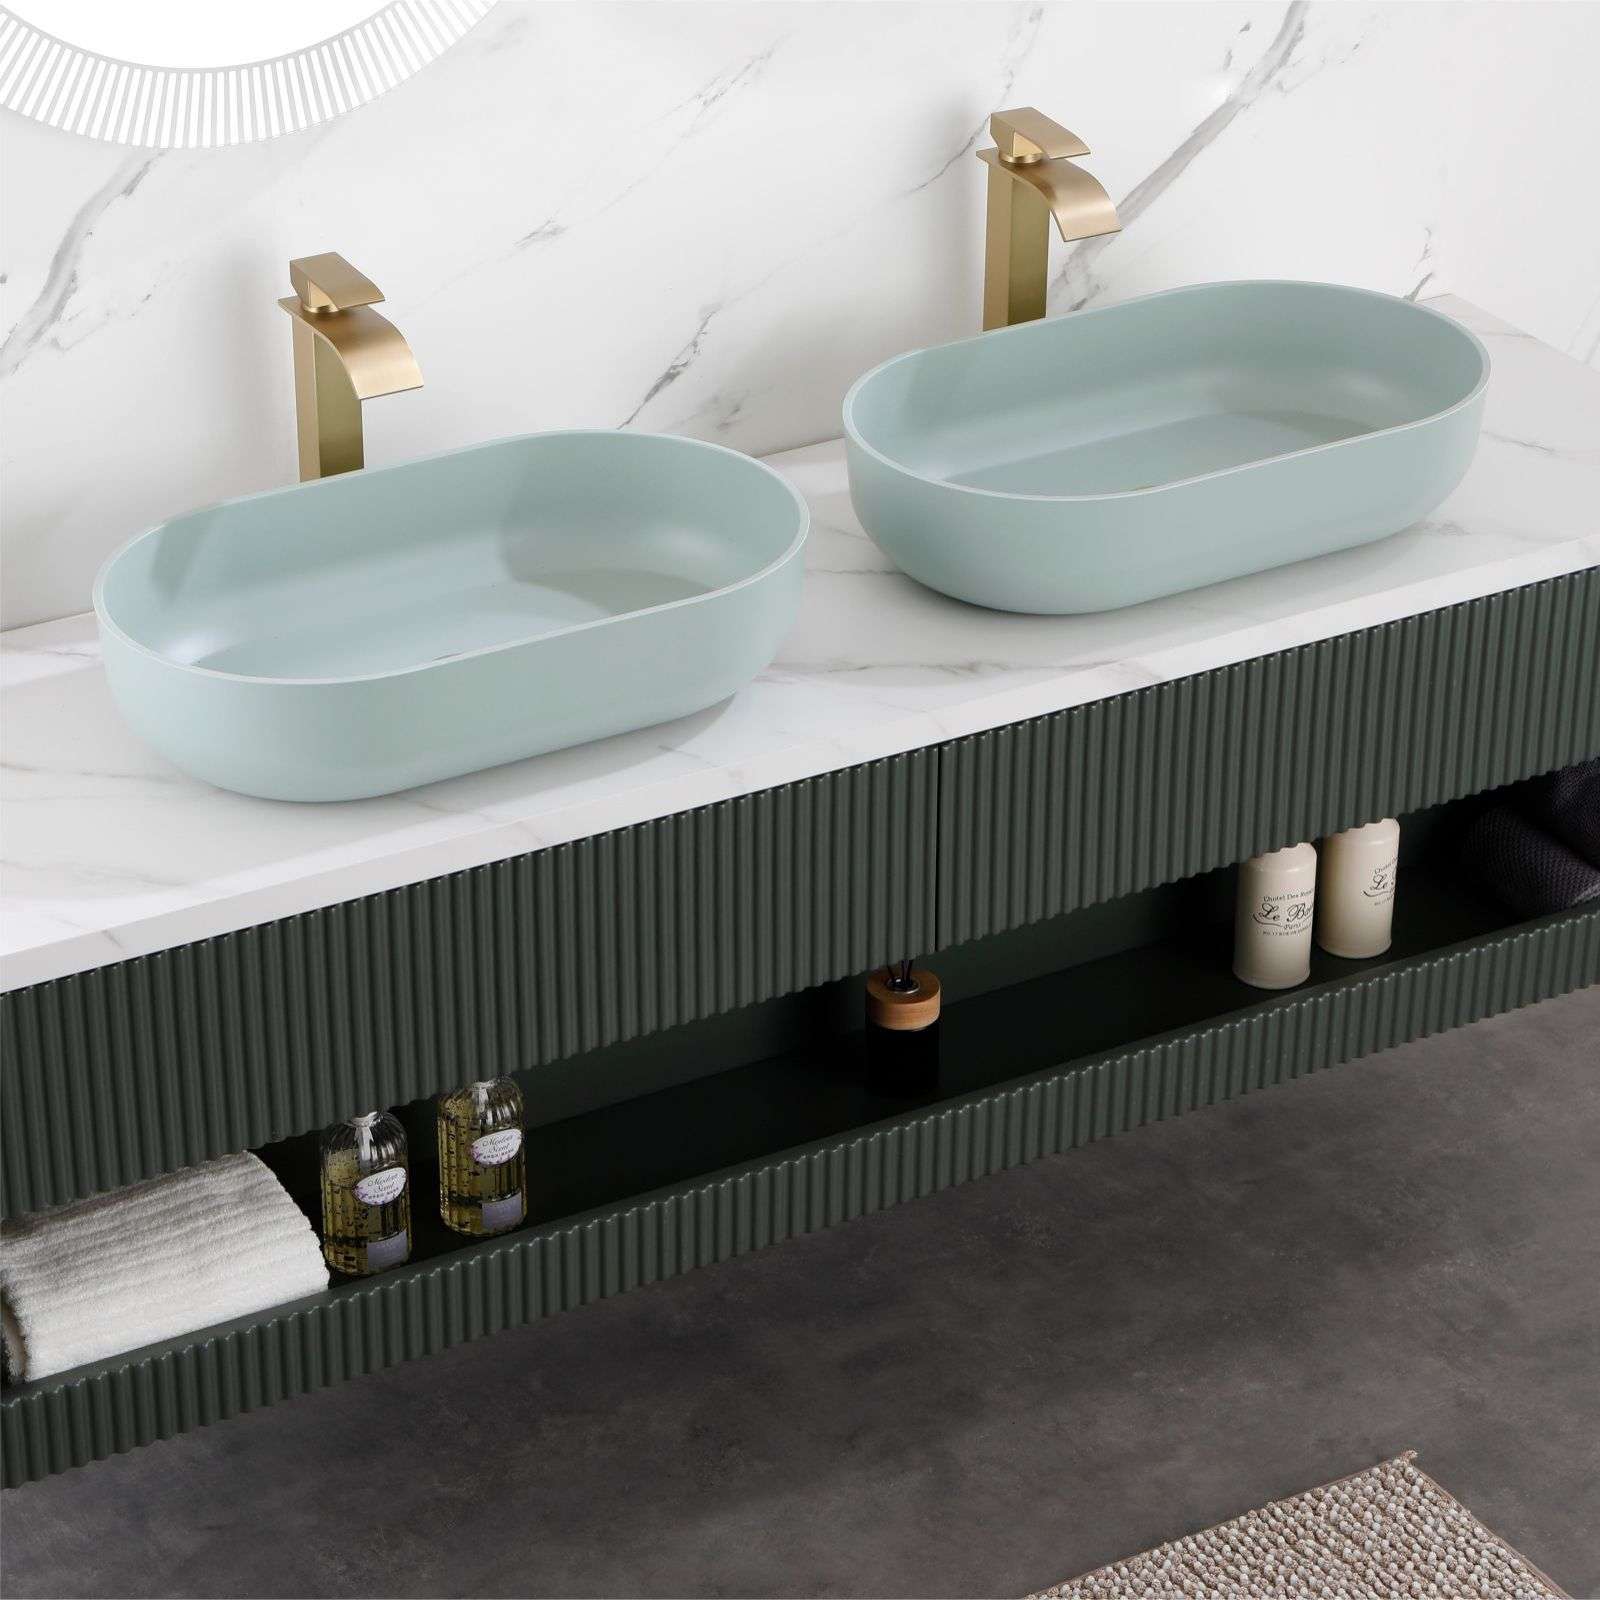 Green Oval Above Bathroom Vessel Sink for Vanity